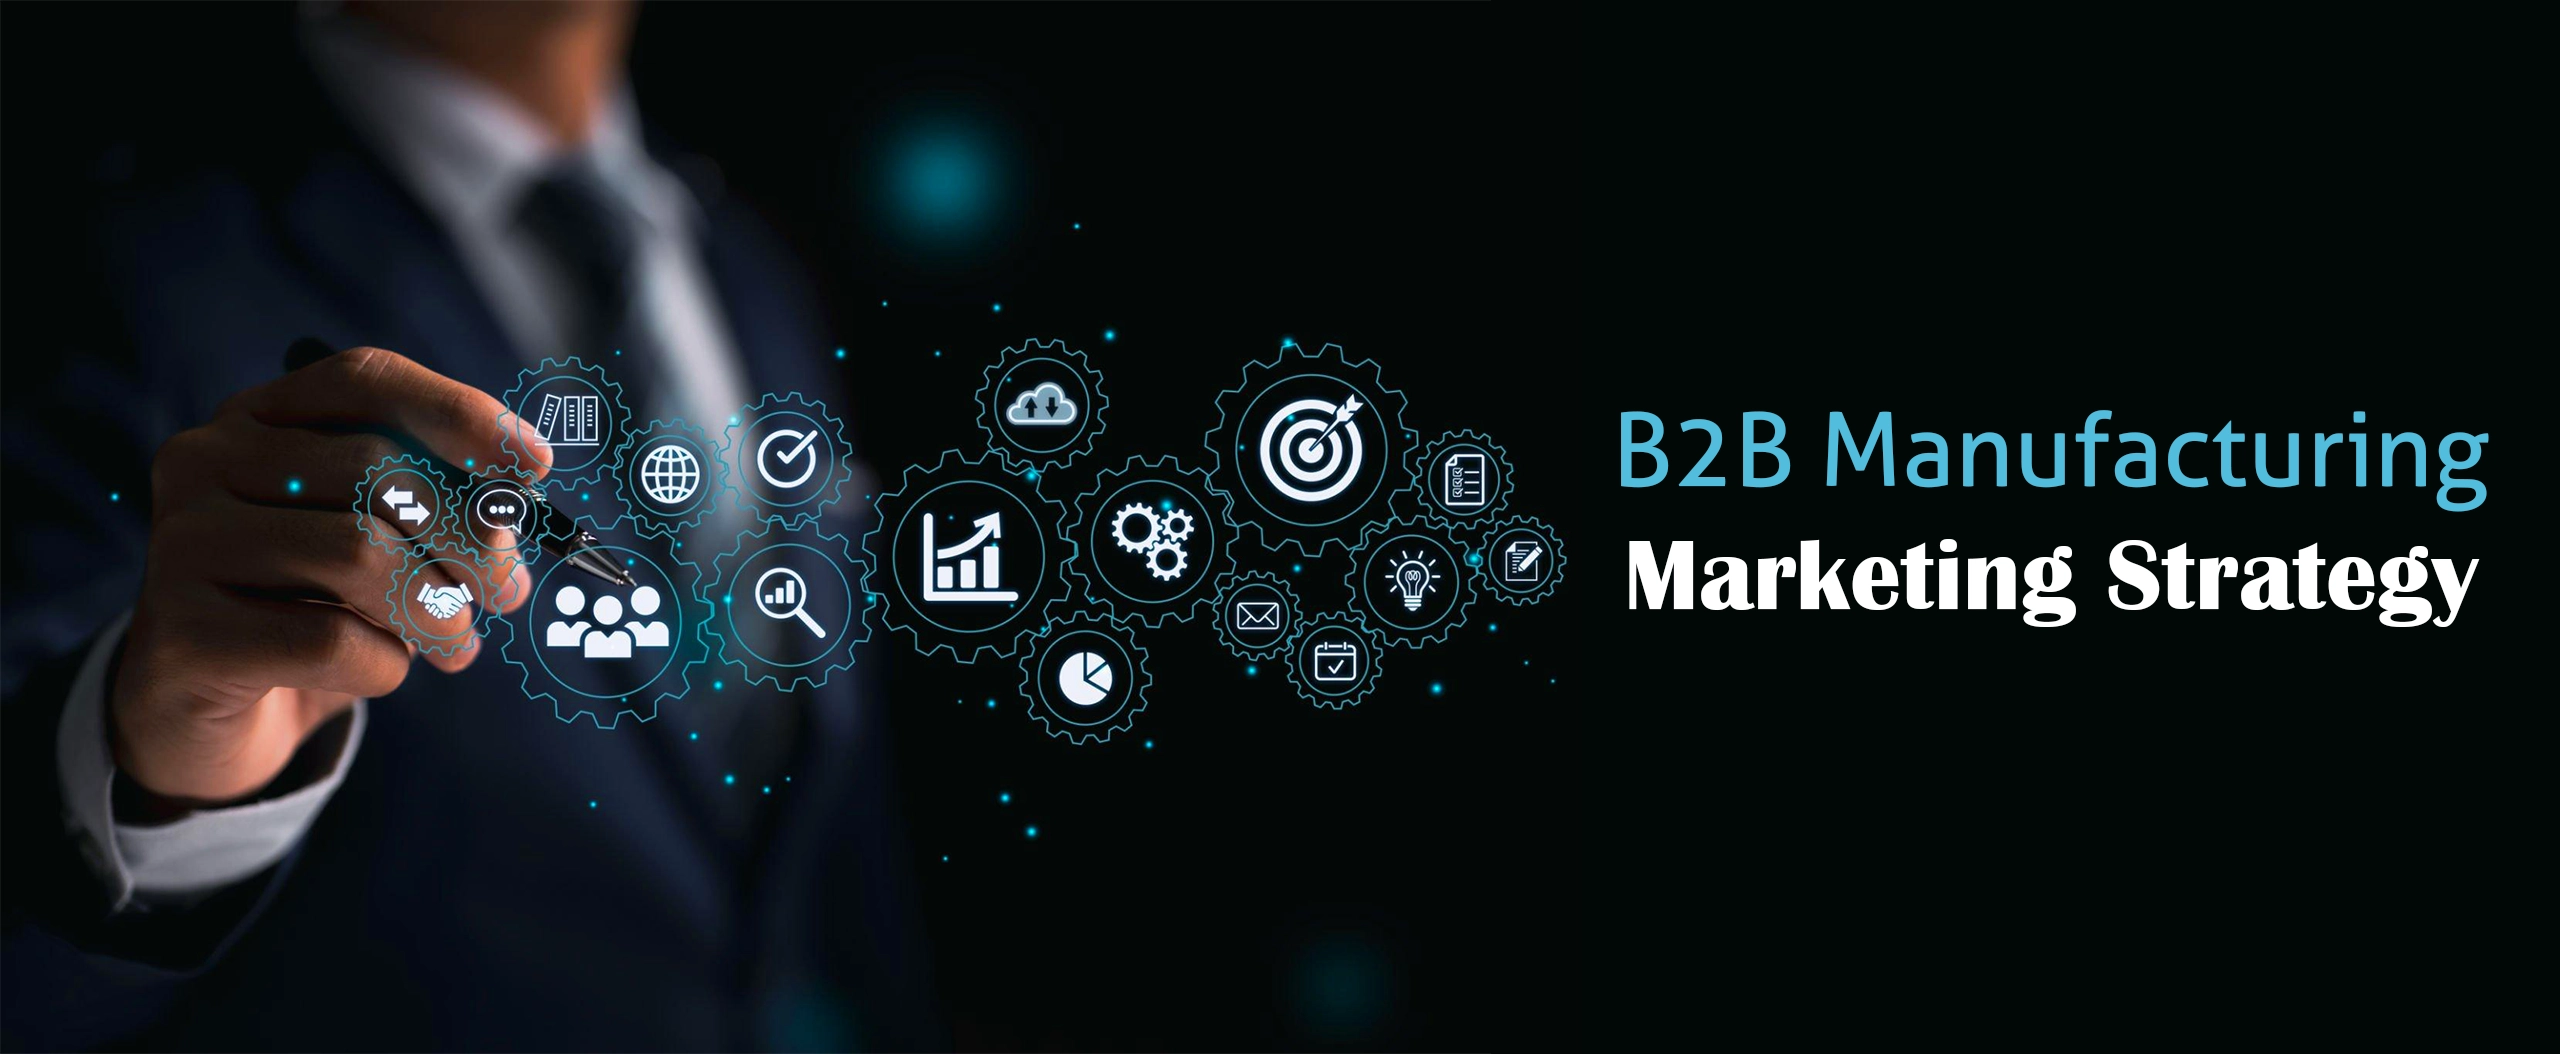 B2B Manufacturing Marketing Strategy